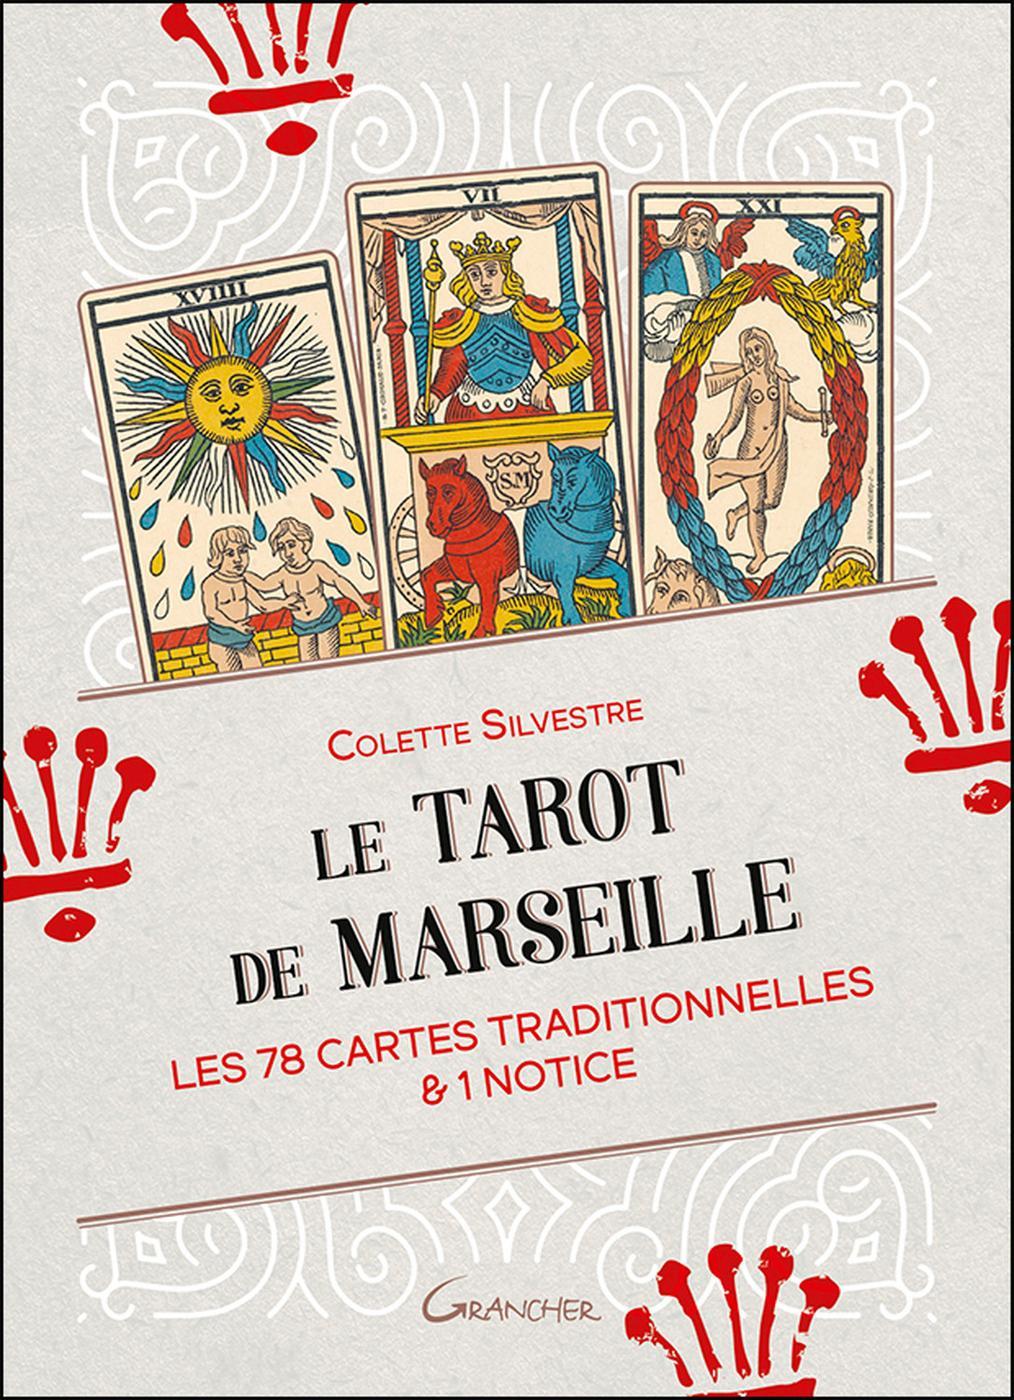 Jeu de tarot de Marseille 78 cartes Grimaud - Ésotérisme Grimaud